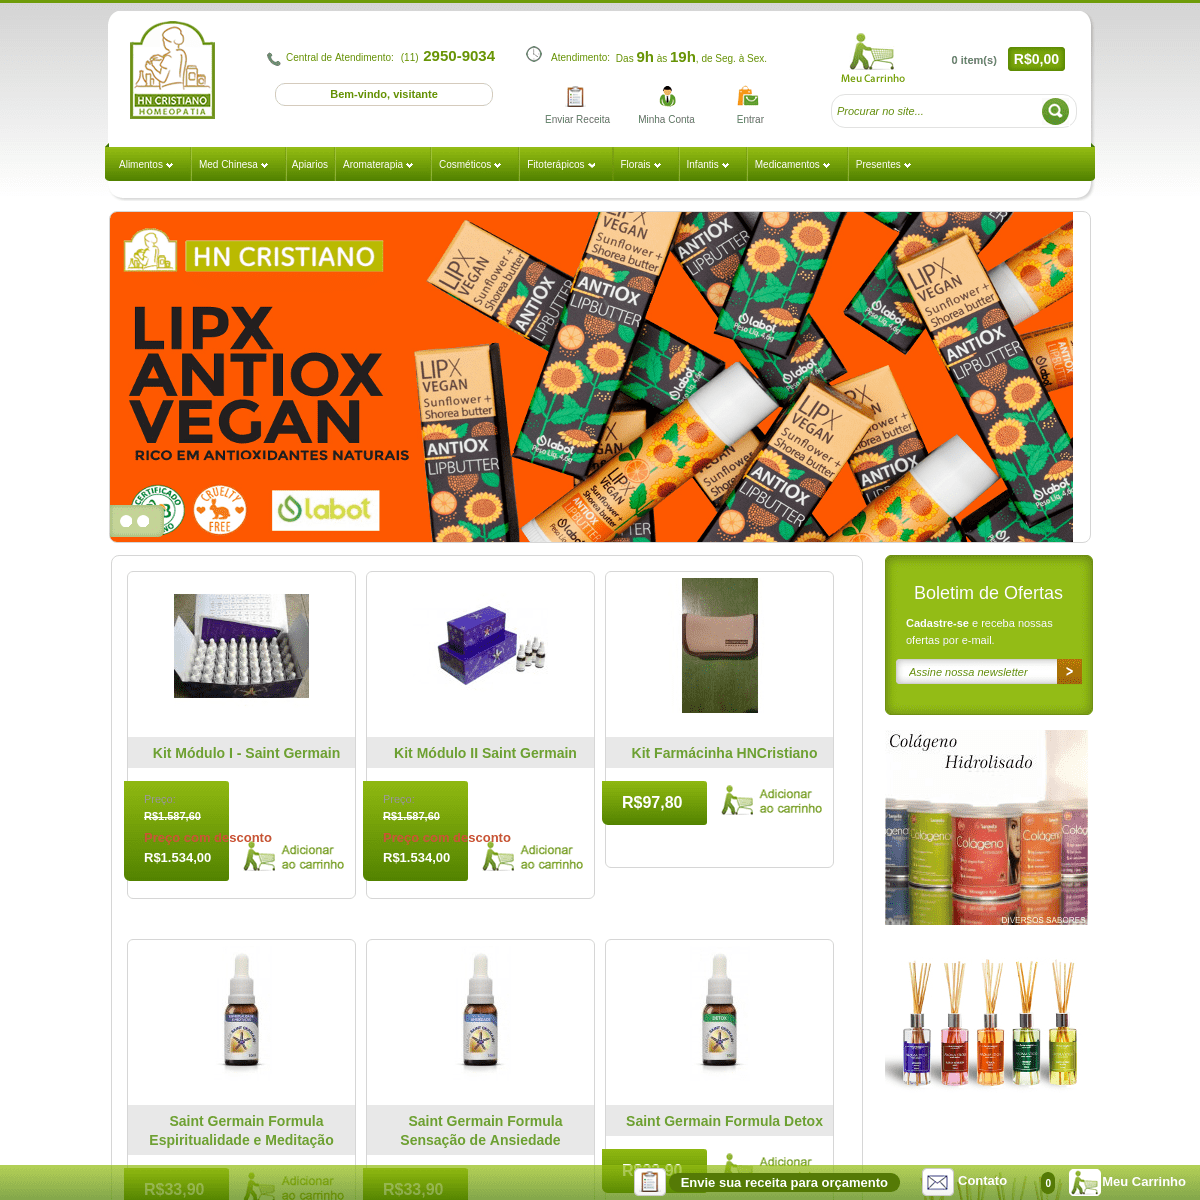 A complete backup of homeopatiahncristiano.com.br